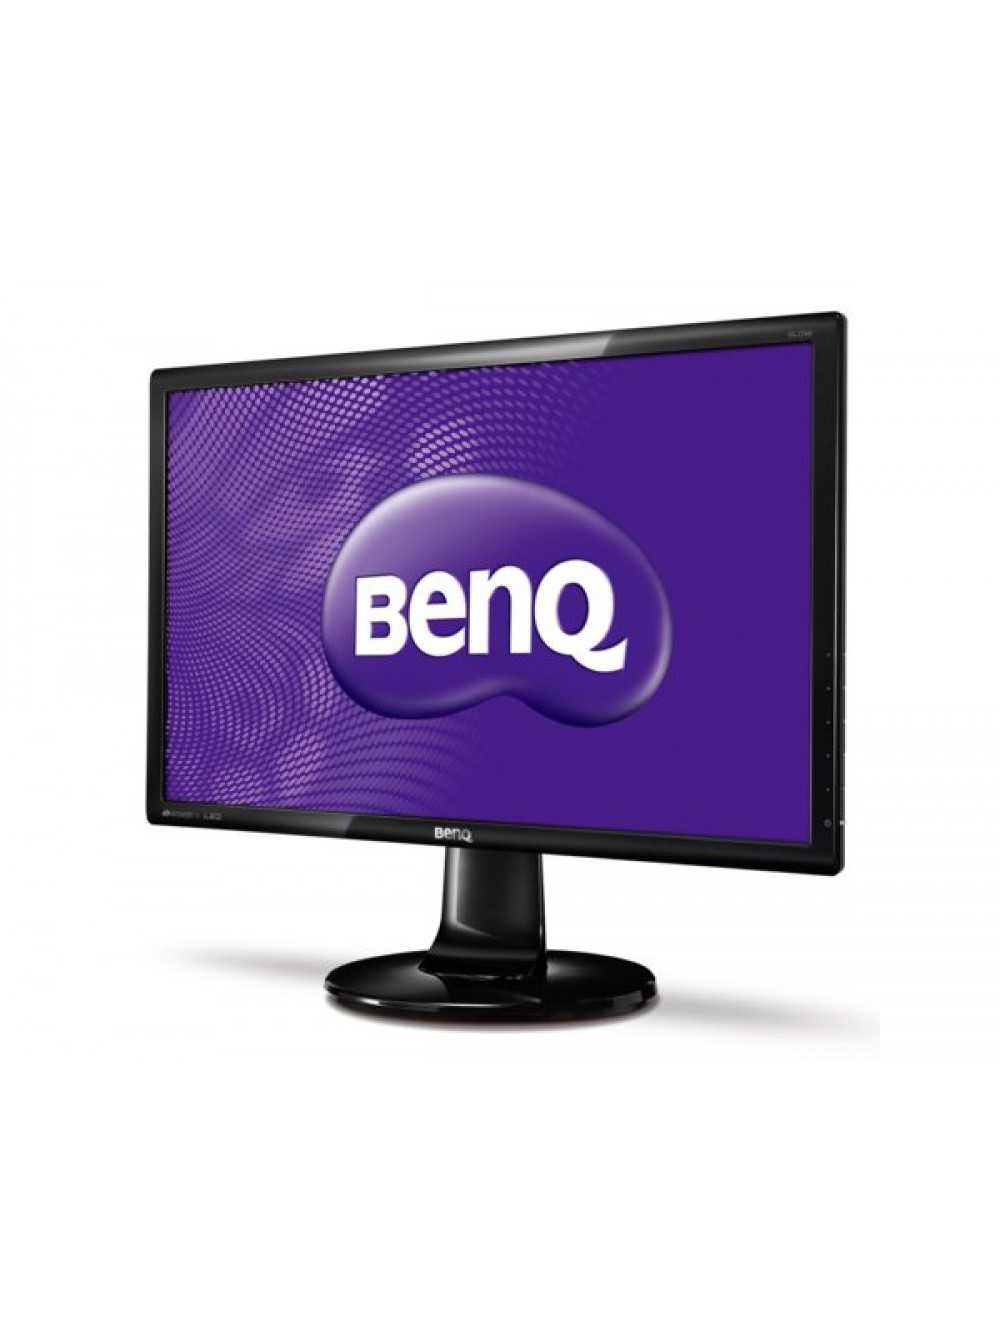 Benq gw2265m - описание, характеристики, тест, отзывы, цены, фото